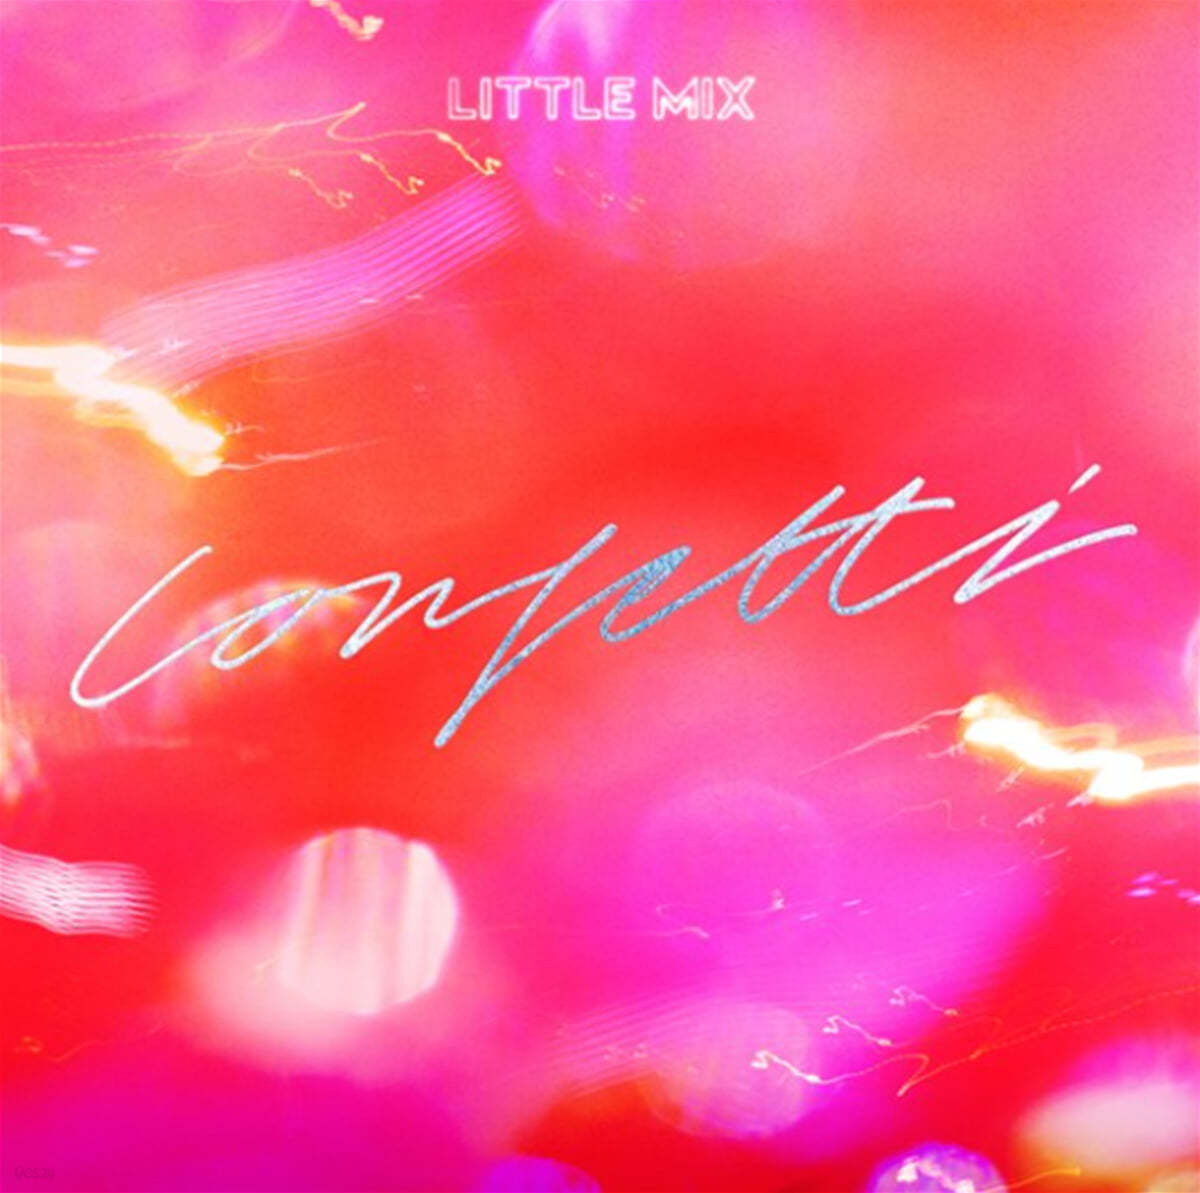 Little Mix (리틀 믹스) - Confetti [핑크 컬러 LP] 